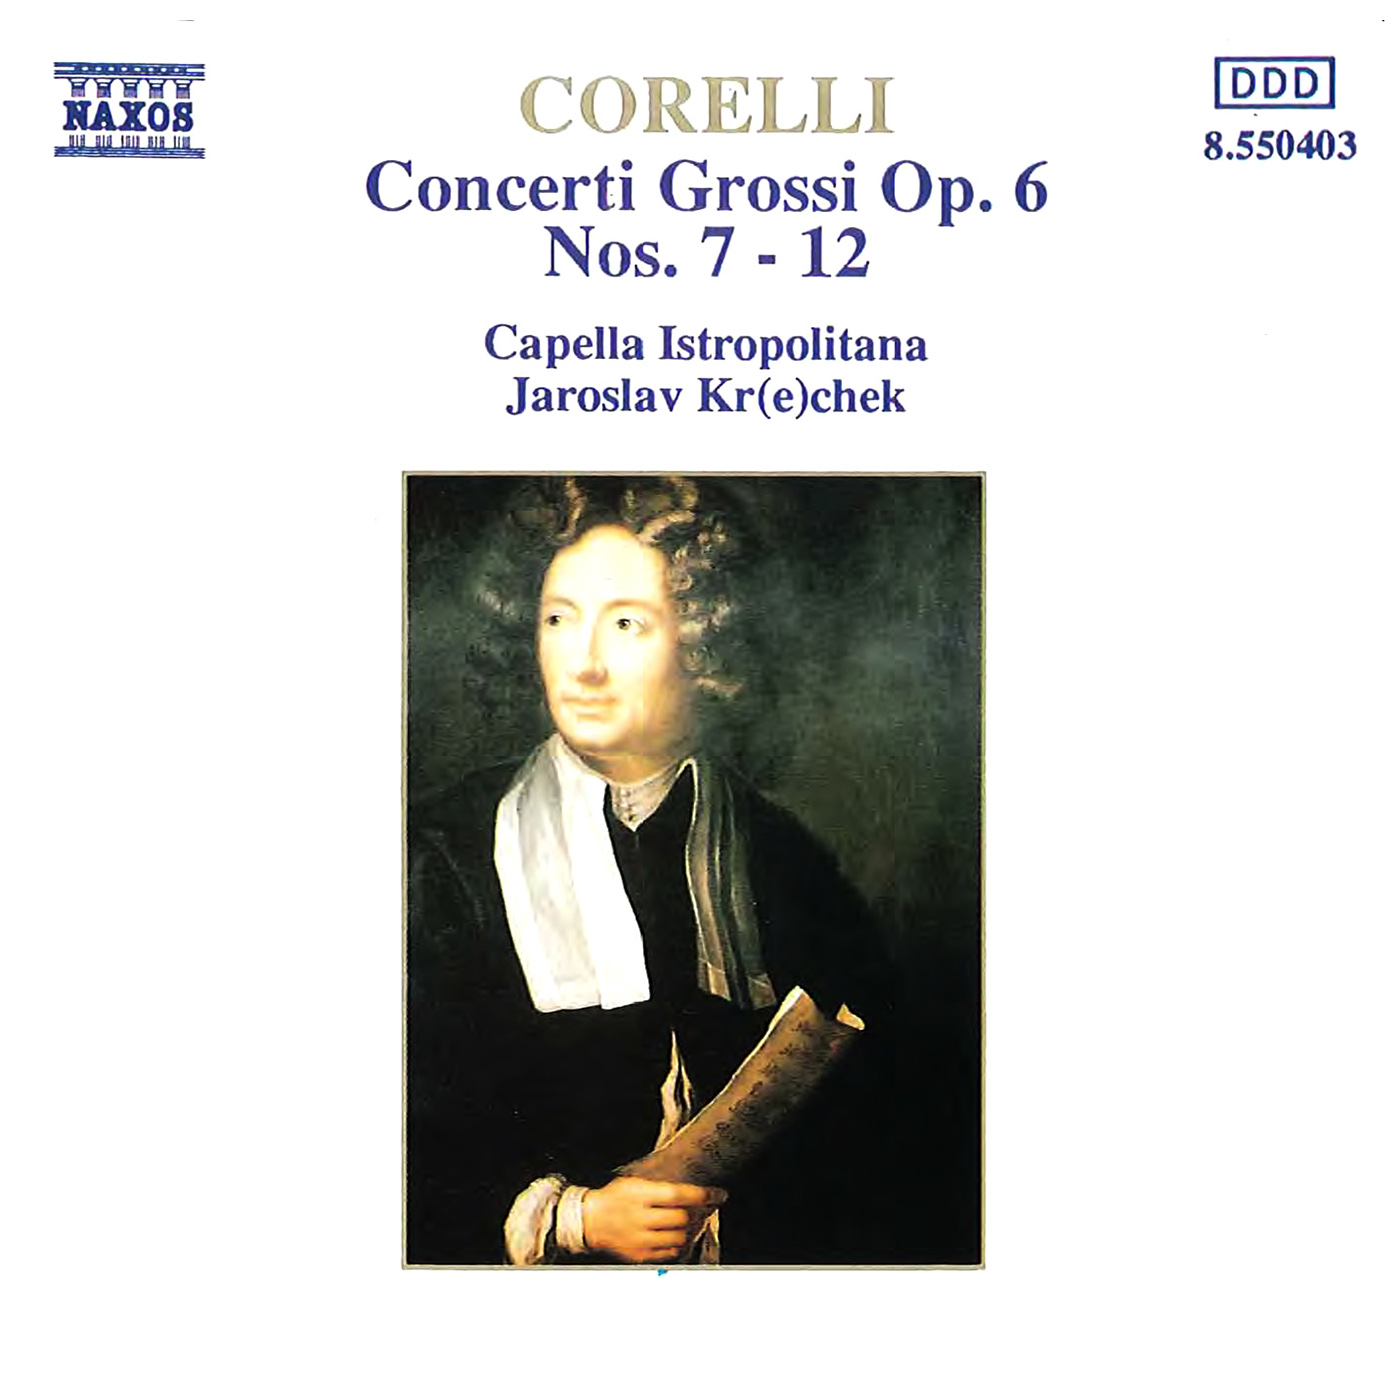 CORELLI, A.: Concerti Grossi, Op. 6, Nos. 7-12 (Capella Istropolitana, Krecek)